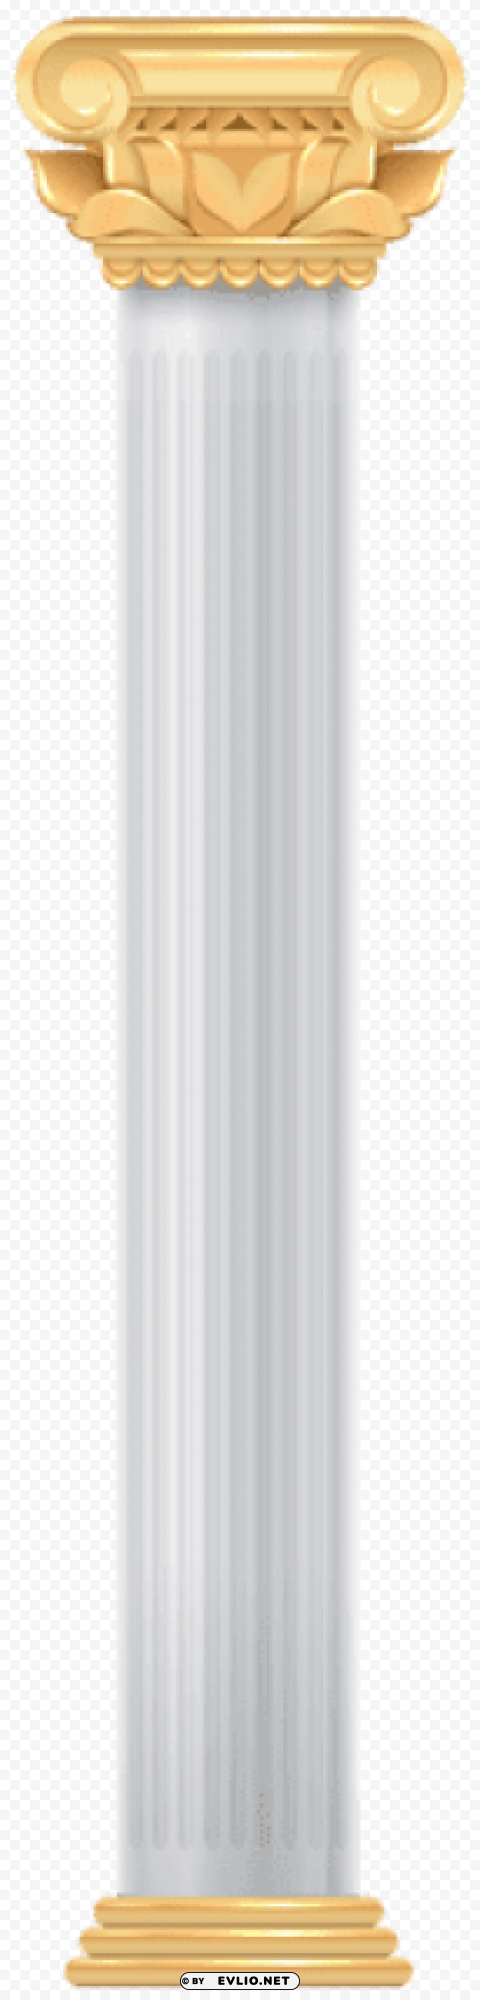 column Free transparent background PNG